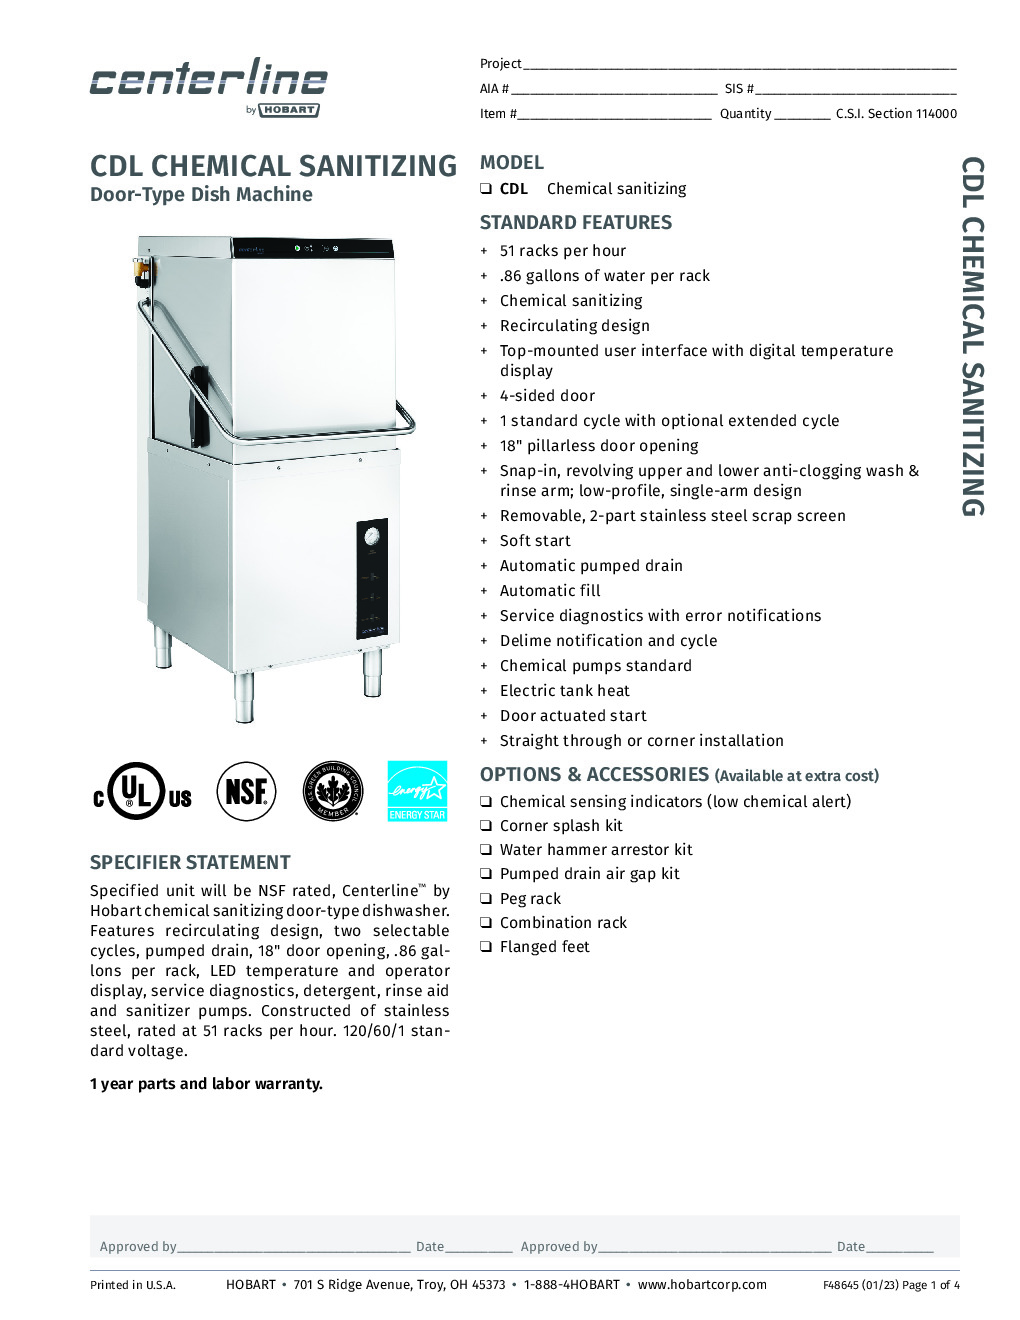 Centerline by Hobart CDL-1 Door Type Dishwasher, 51 Racks/Hr -44 Gal/Hr -Low Temp Electric Tank Heat -1 Wash Cycle/17